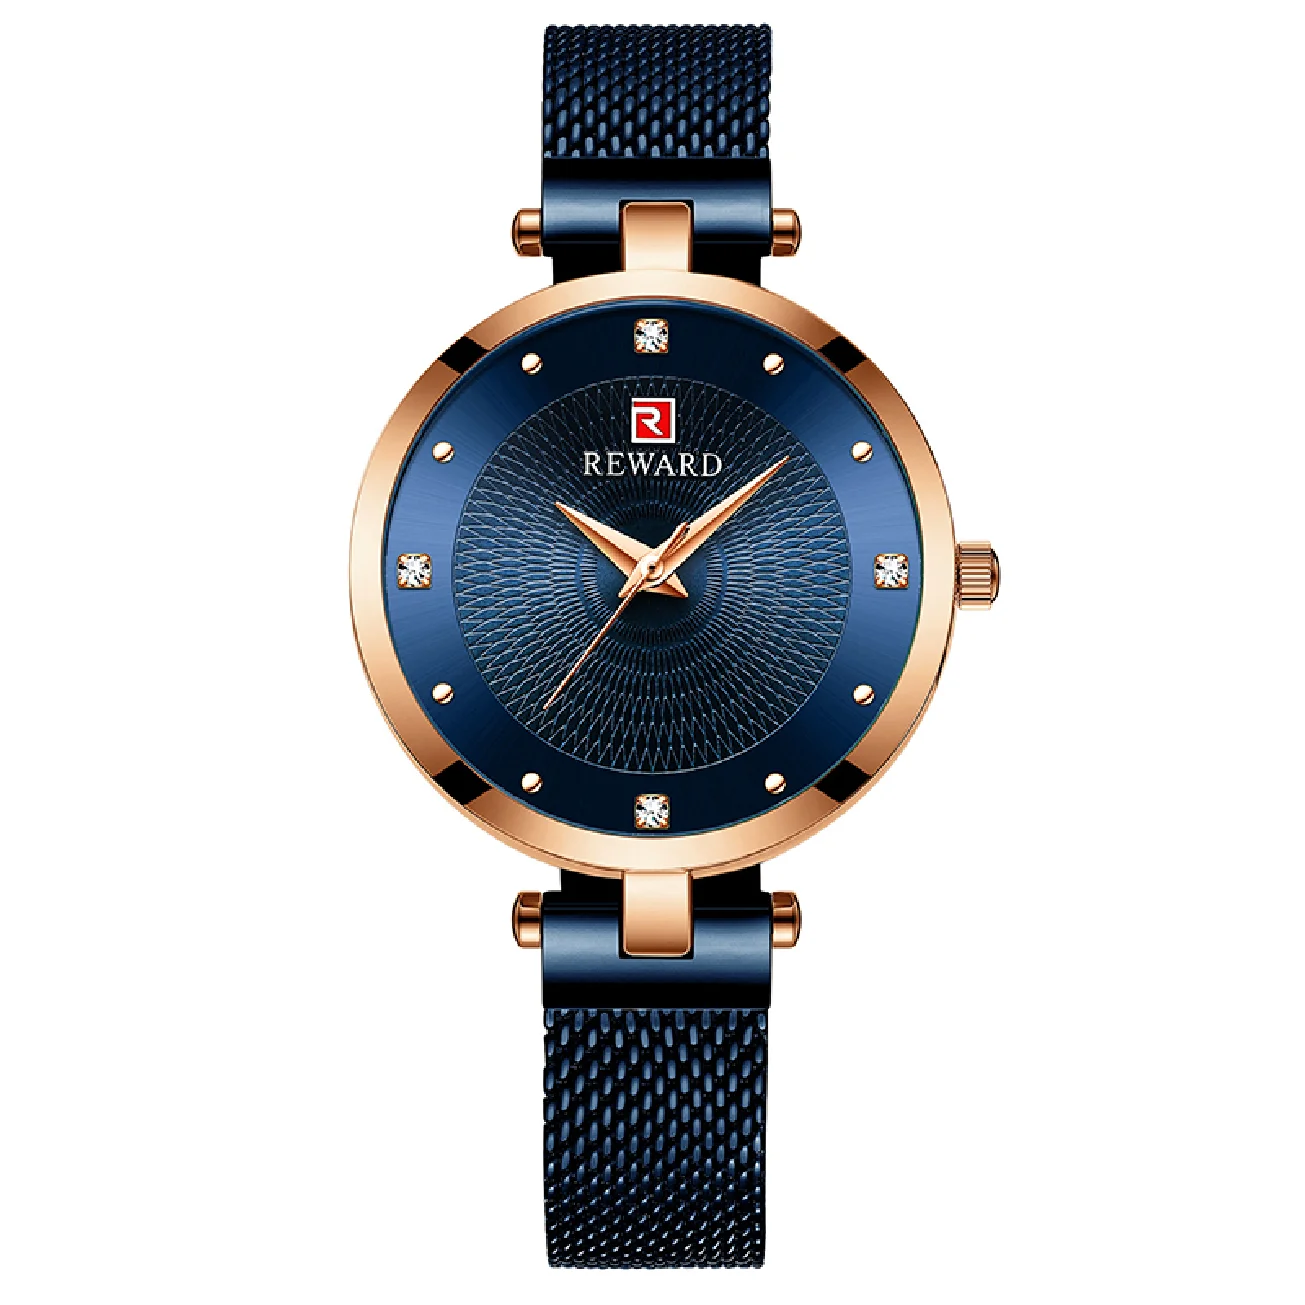 REWARD Luxury Women Watches Fashion Dress Quartz Watch Ladies Stainless Steel Waterproof Wrist Watch Lady Clock Relogio Feminino enlarge